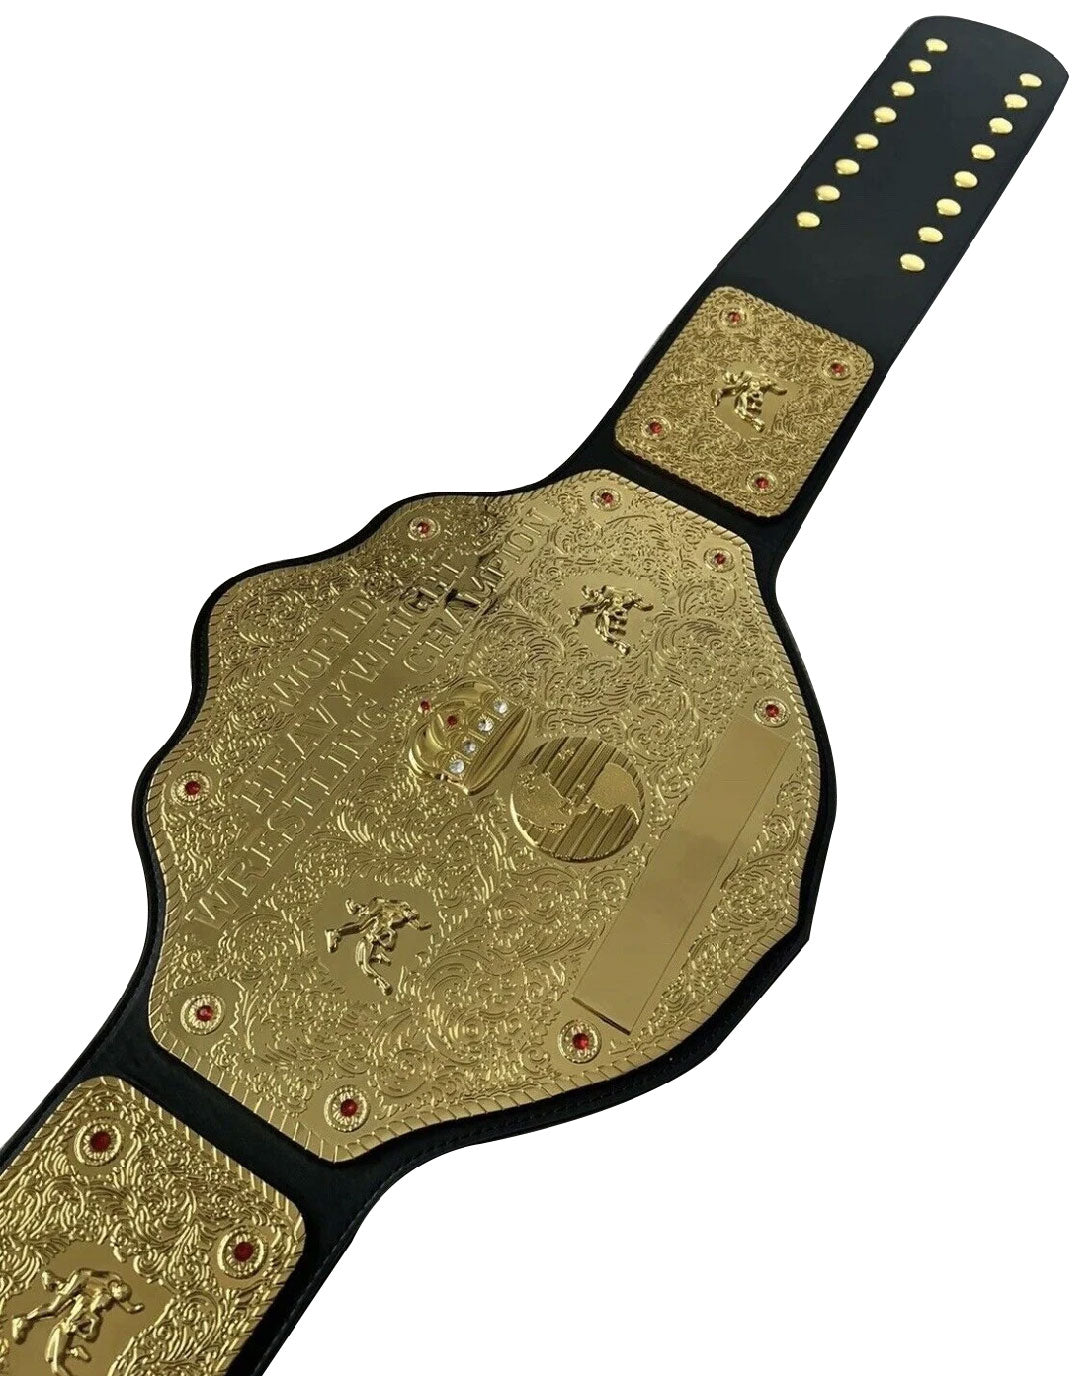 TRUESAGA - Big Gold Wrestling Championship Belt Class One Replica - Adult Waist Size Up to 46" - 2mm Metal Plate Genuine Leather Base